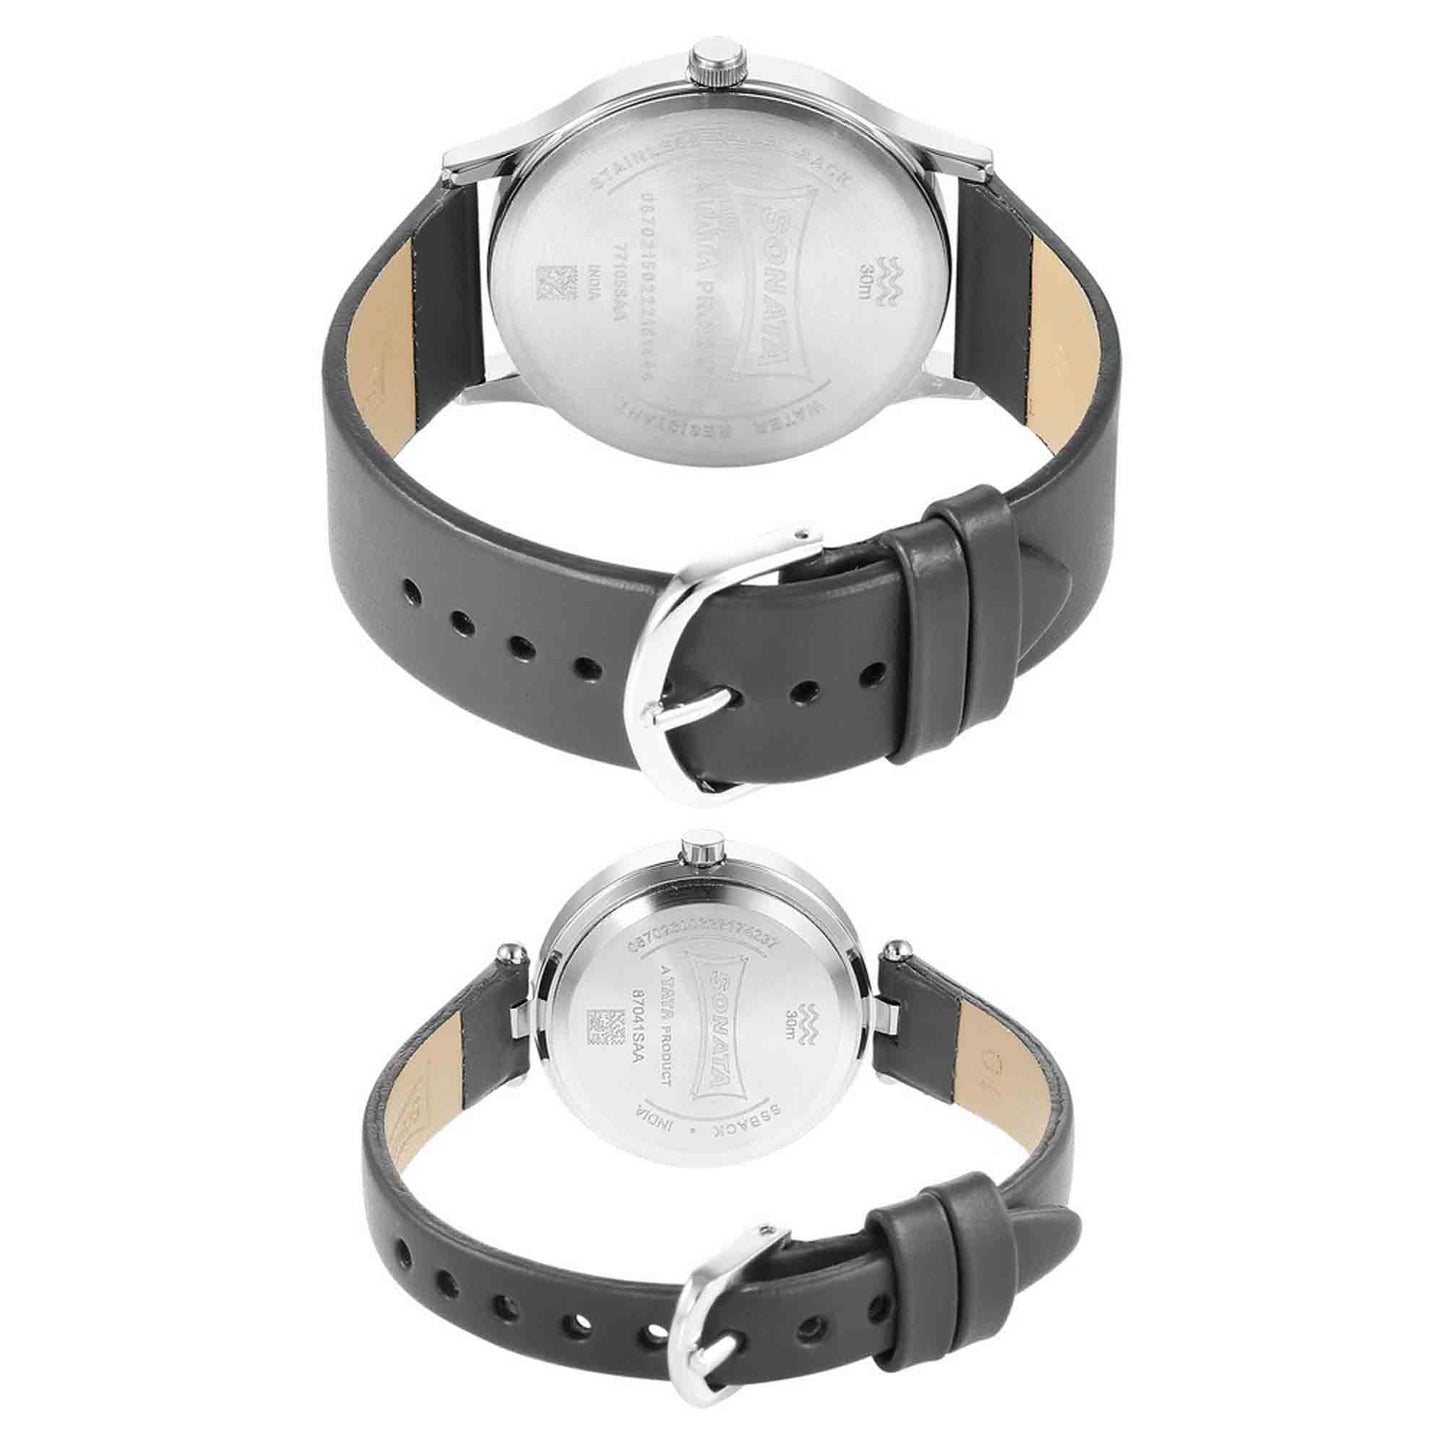 Sonata Quartz Analog Silver Dial Leather Strap Watch for Couple